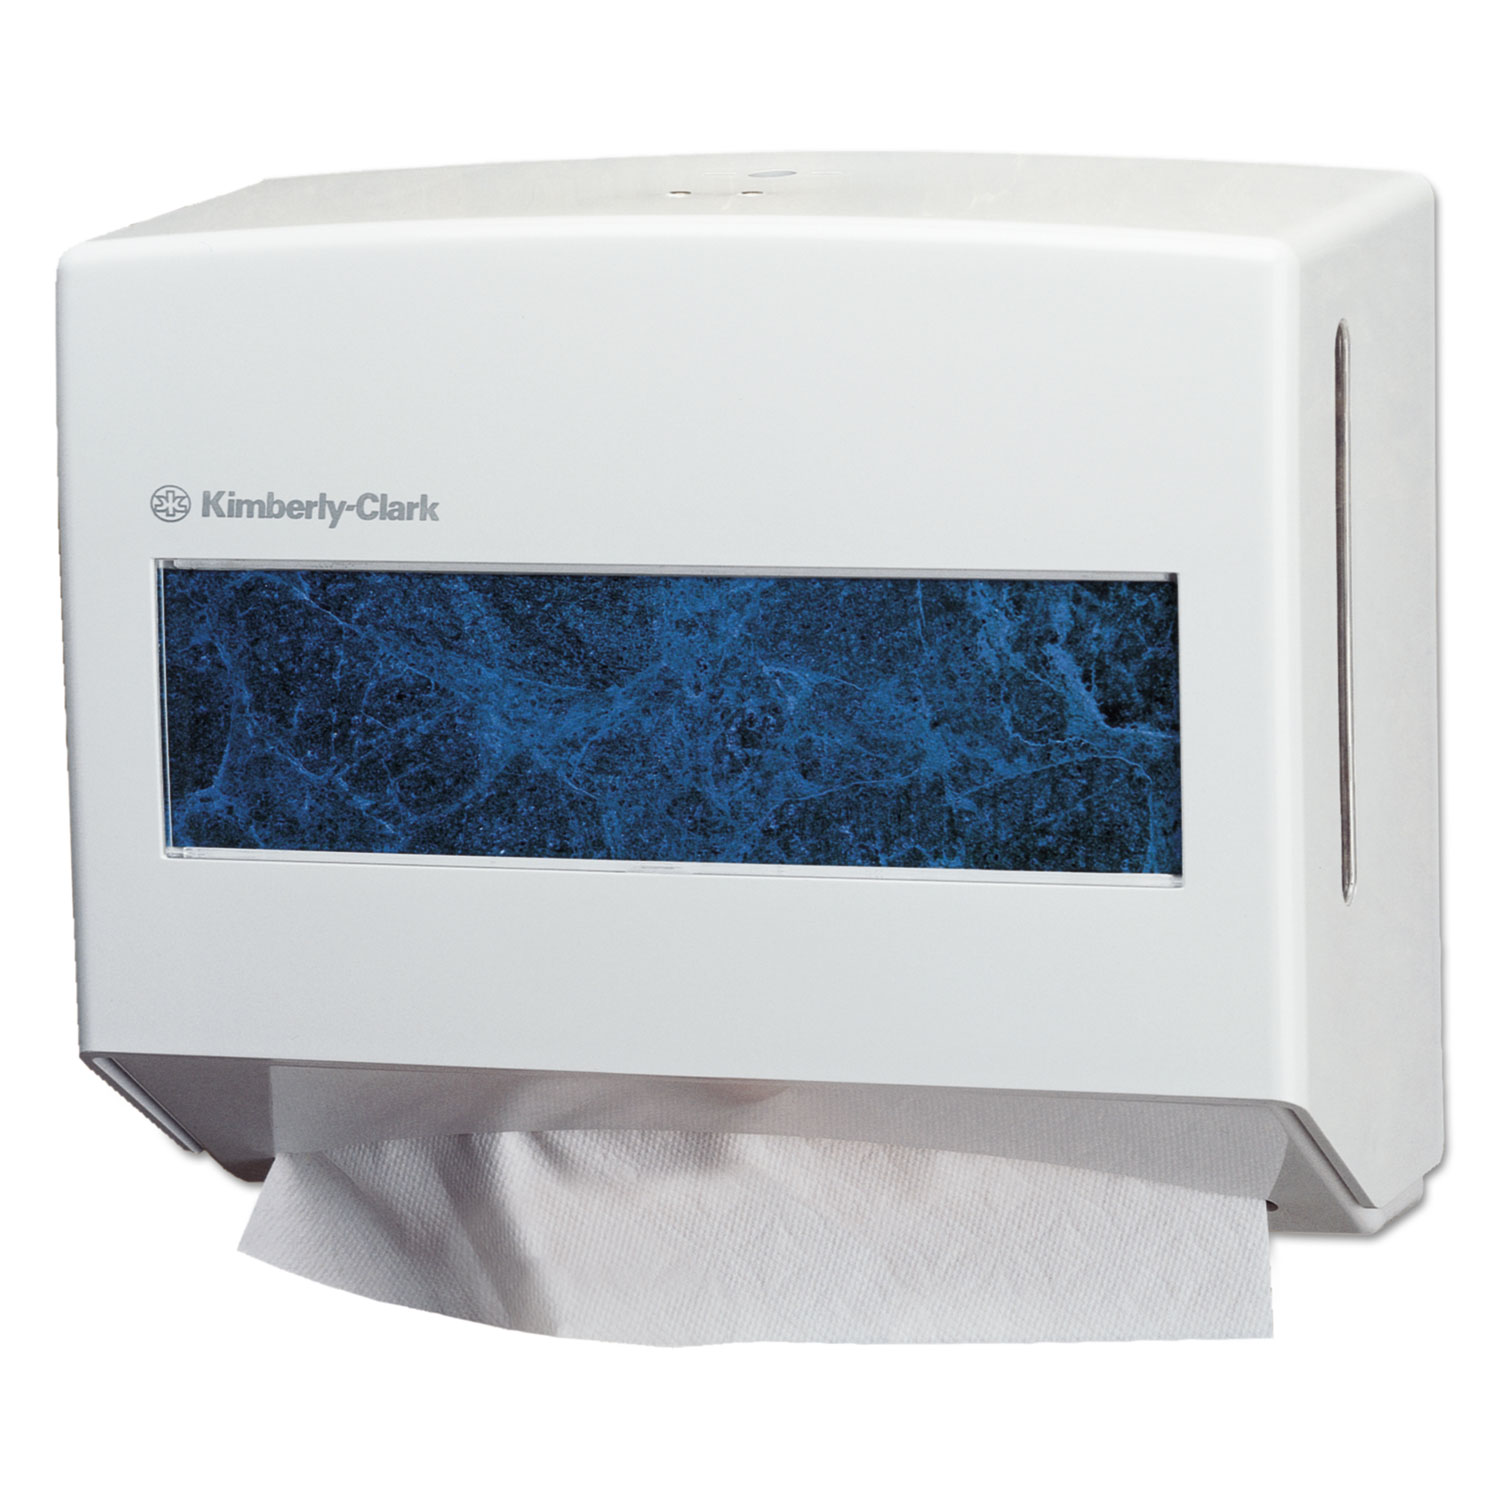  Kimberly-Clark Professional* 9217 Scottfold Compact Towel Dispenser, 13 3/10 x 13 1/2 x 10, Pearl White (KCC09217) 